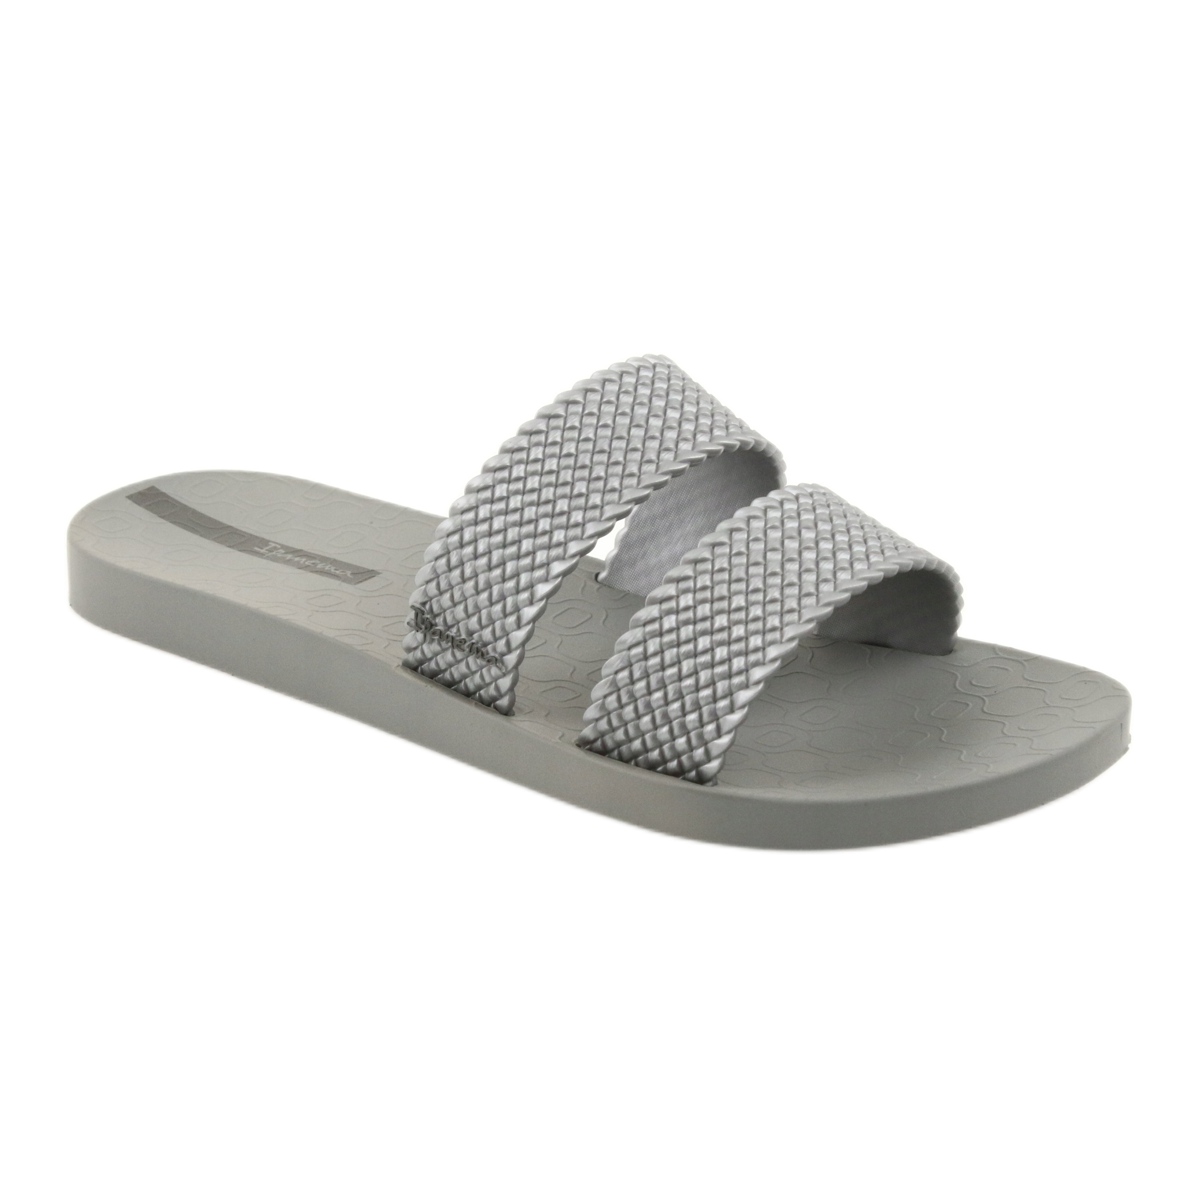 Ipanema Women's slippers 26223 silver grey | eBay